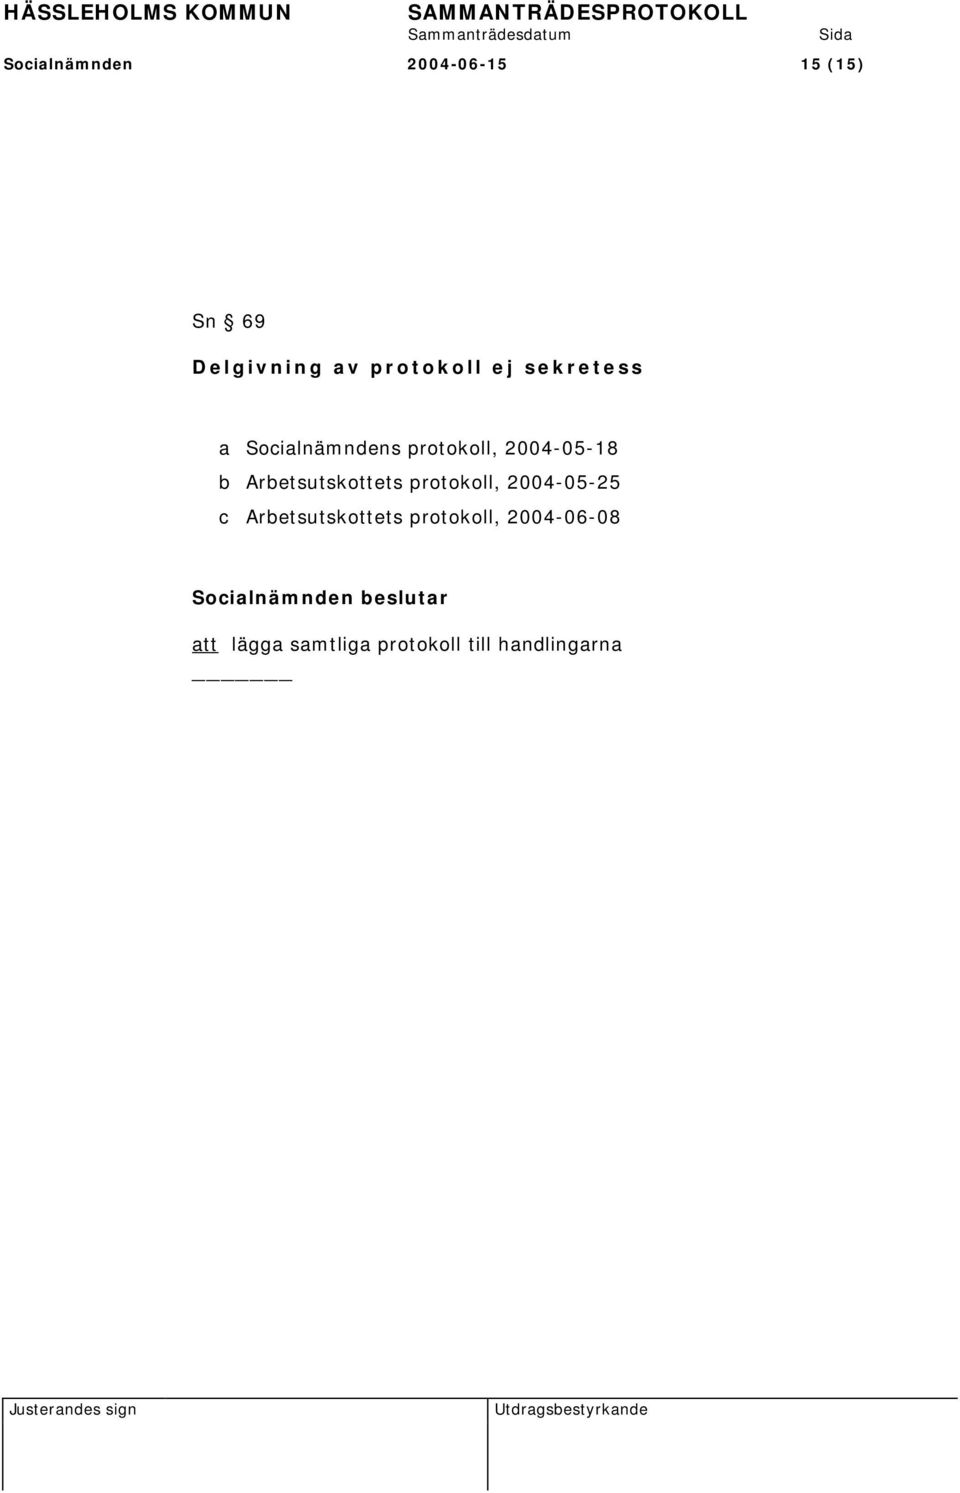 2004-05-18 b Arbetsutskottets protokoll, 2004-05-25 c